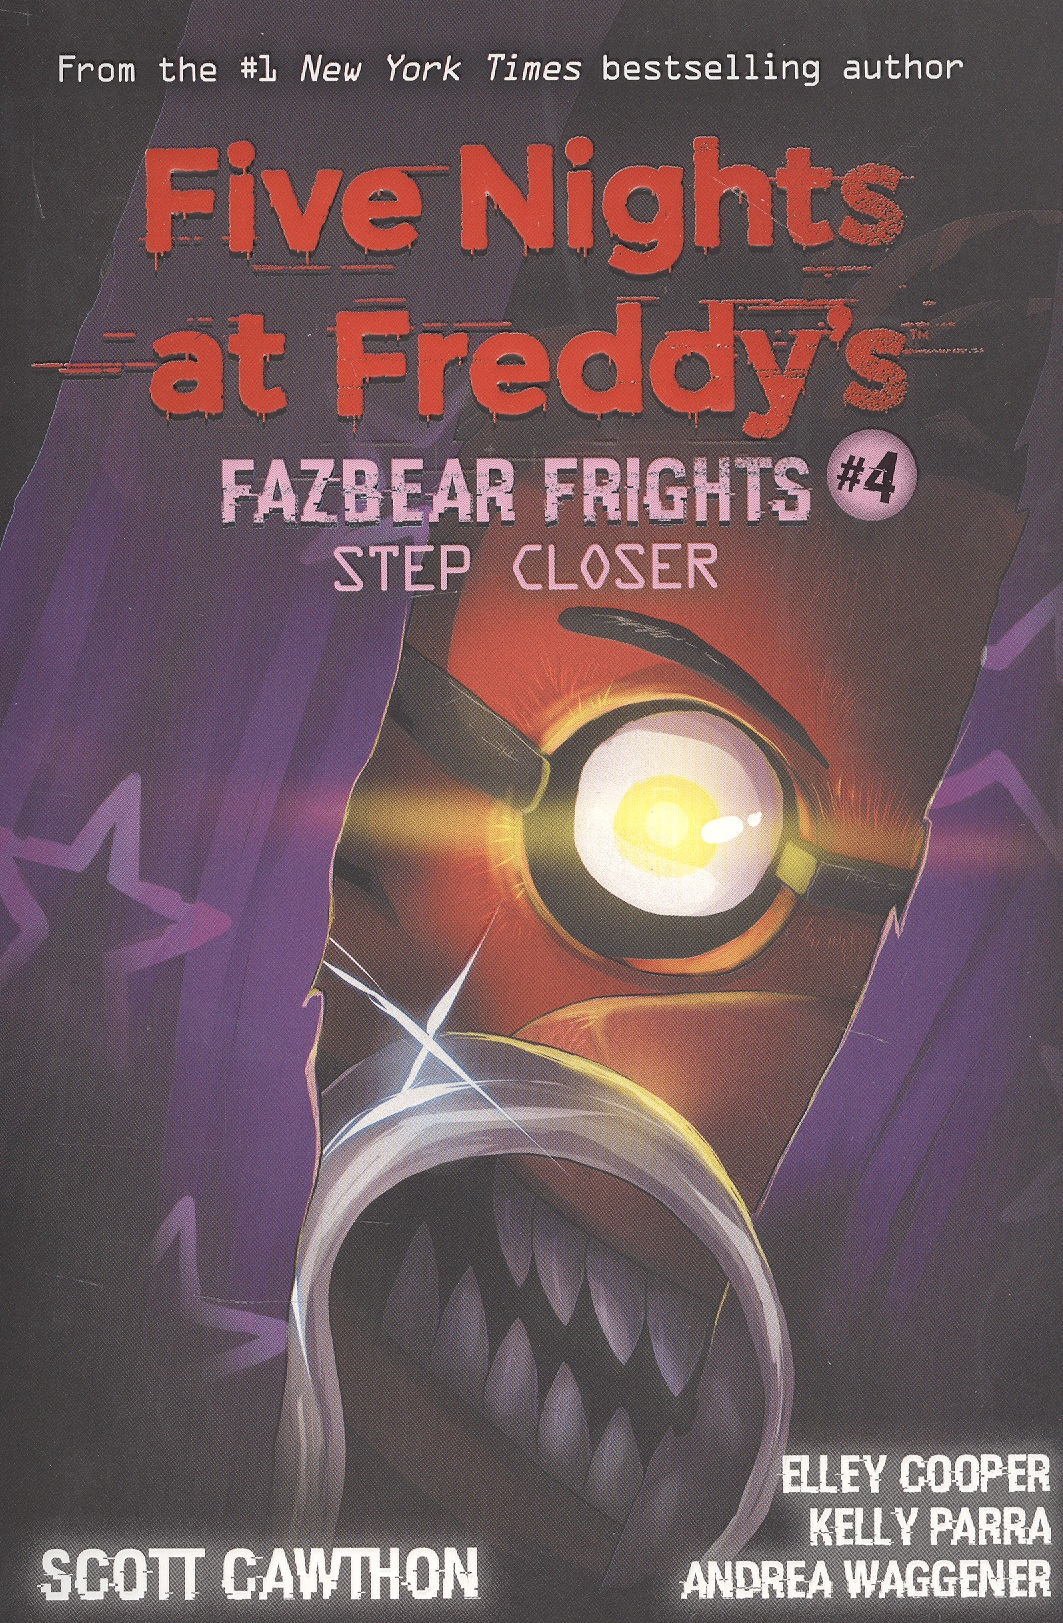 Five nights at freddys: Fazbear Frights #4. Step Closer